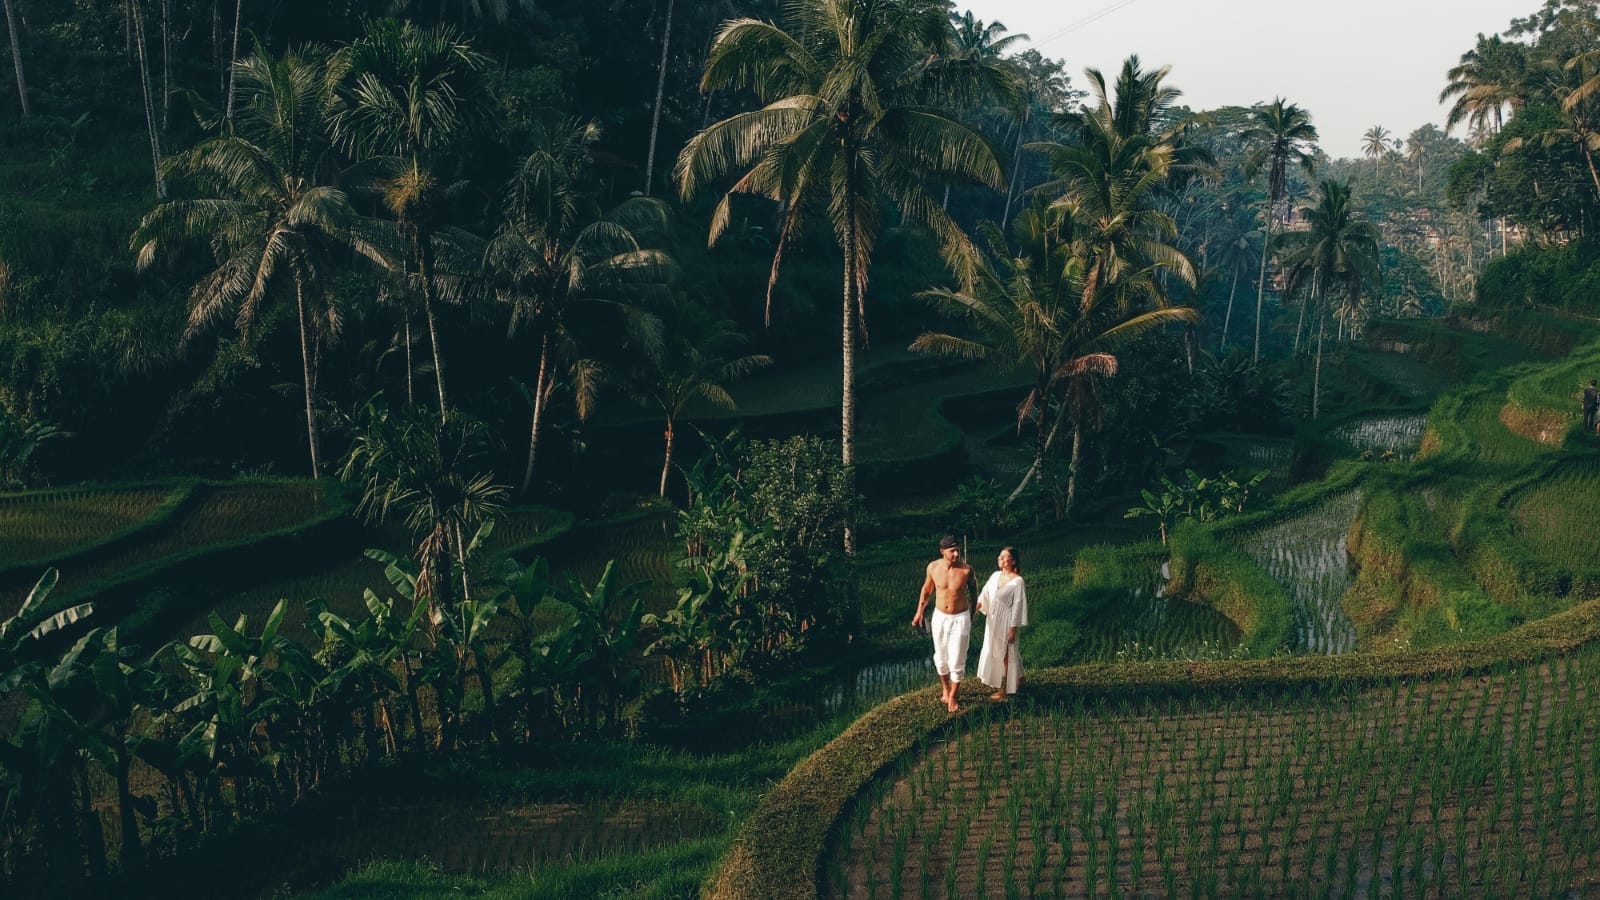 Ilse en Nick in Indonesië | Goedkoopste landen om te reizen